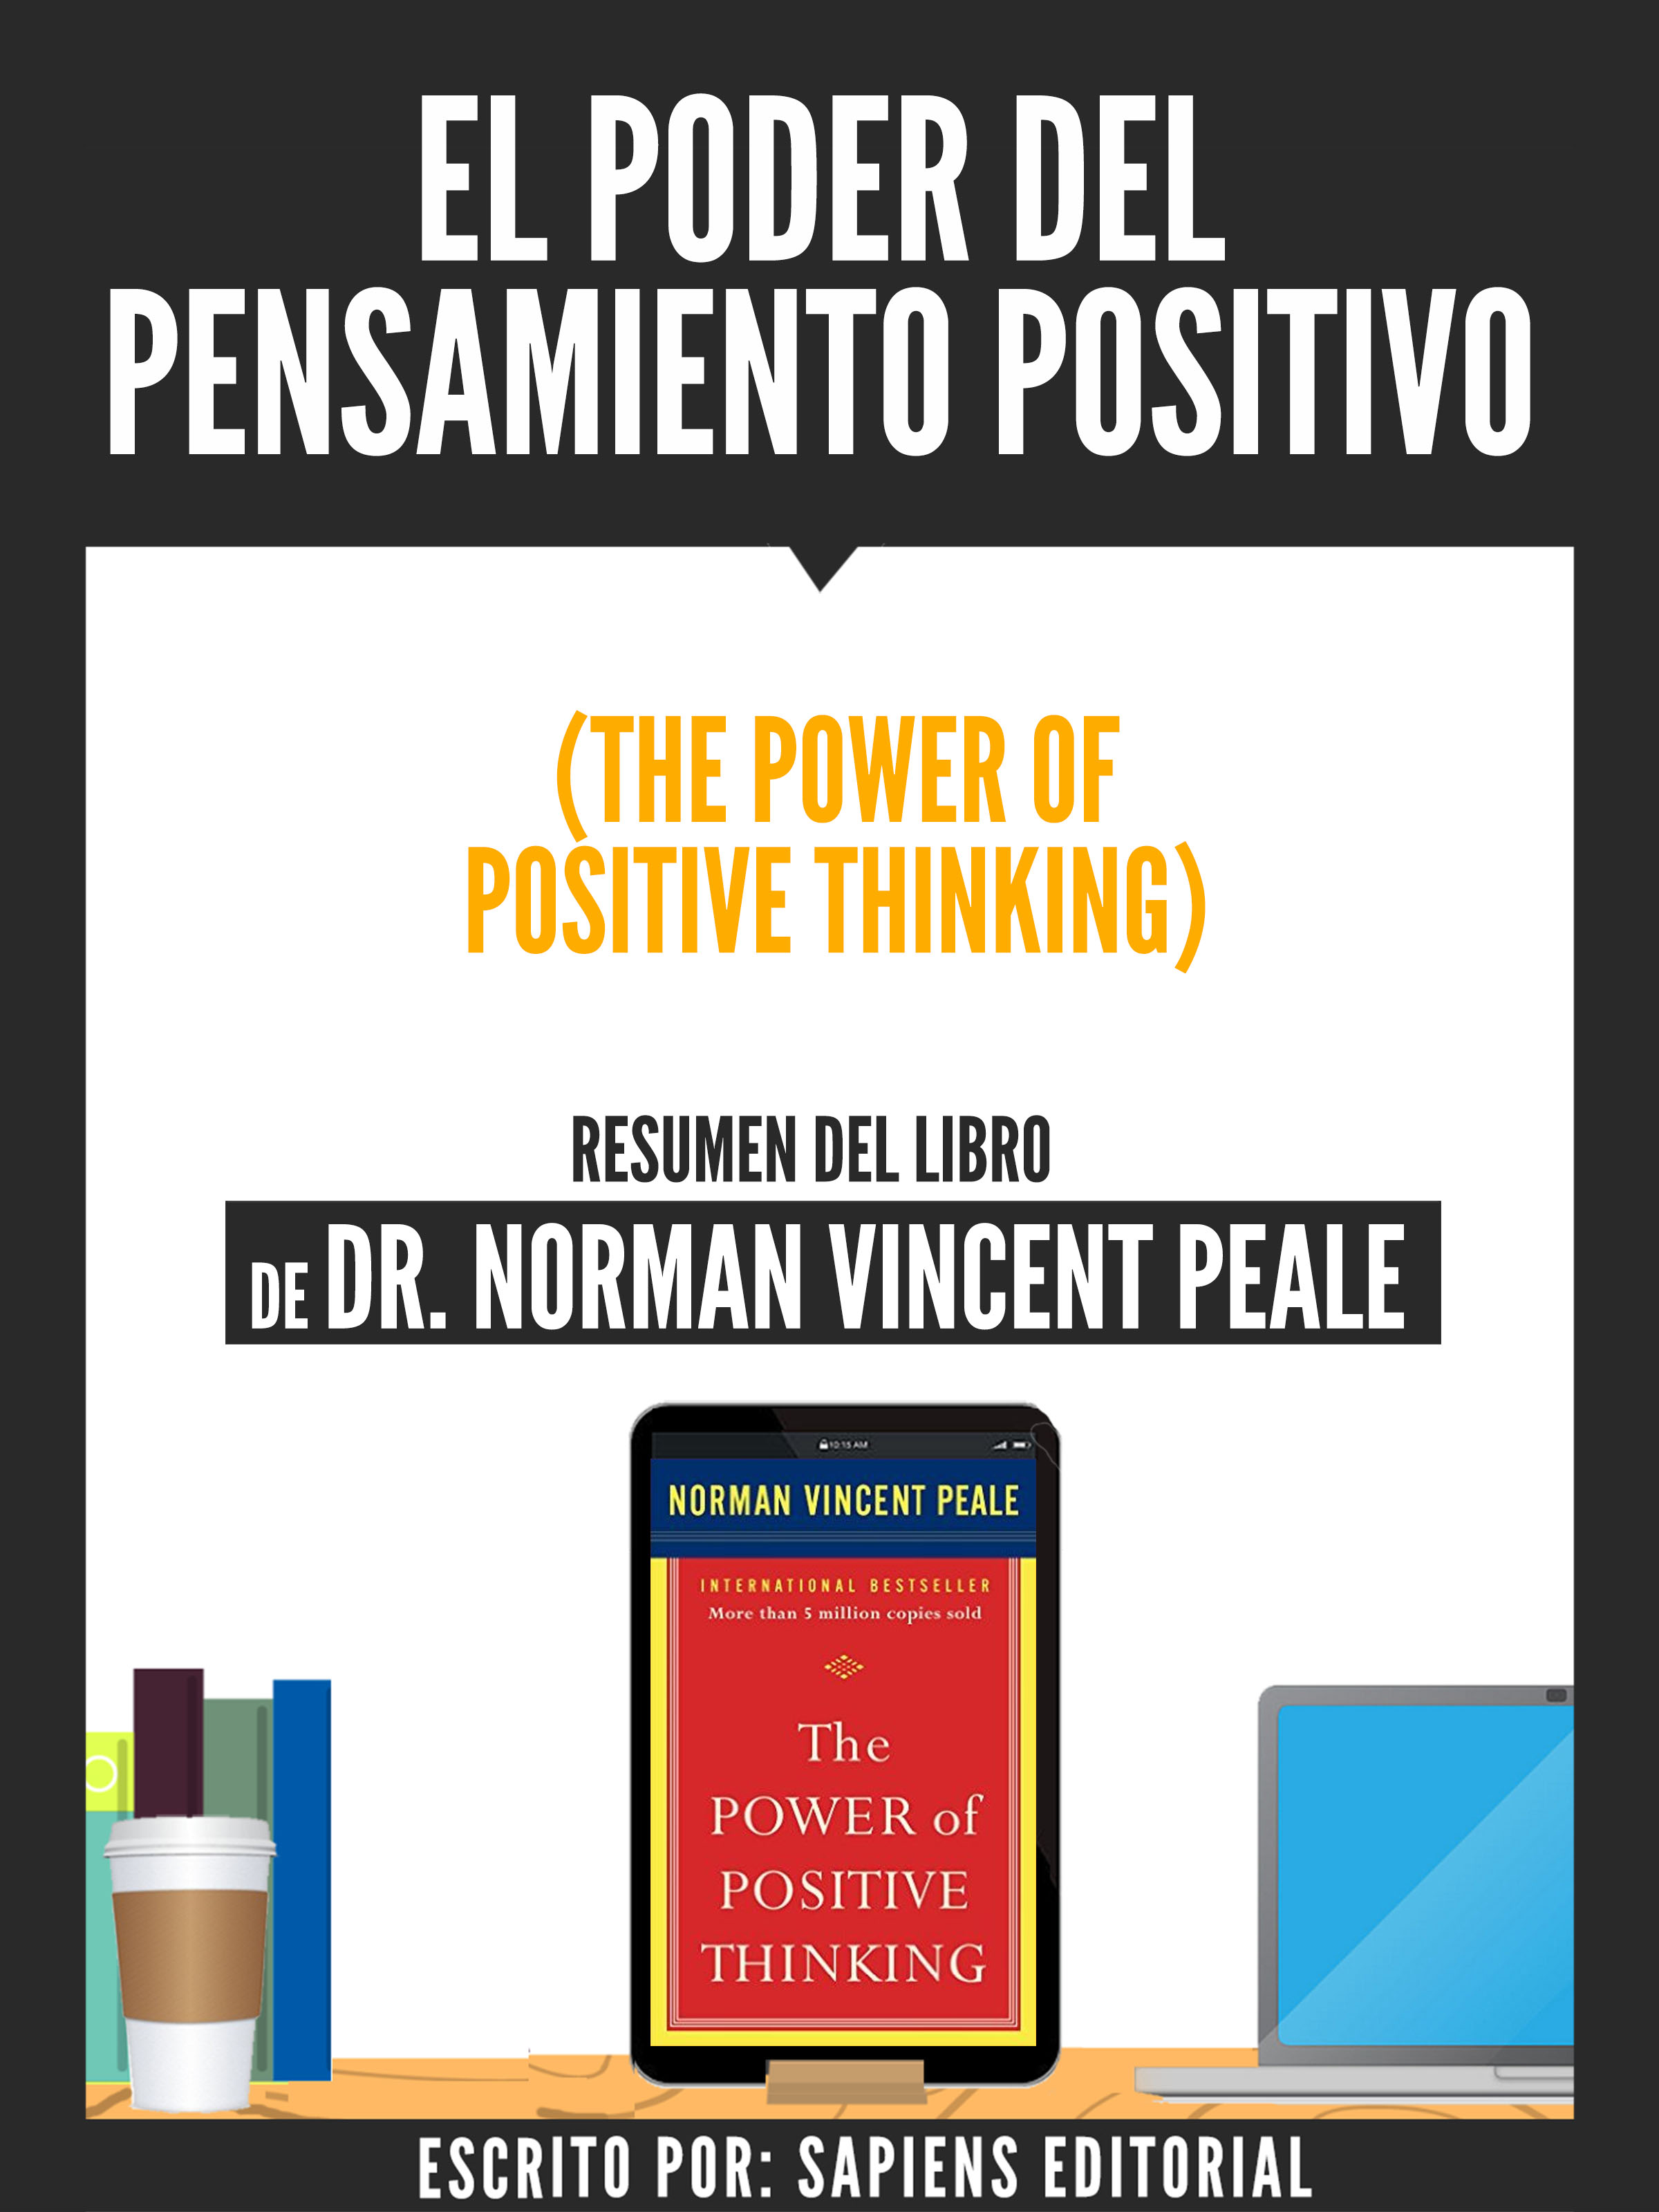 El poder del pensamiento positivo pdf norman vincent peale the power